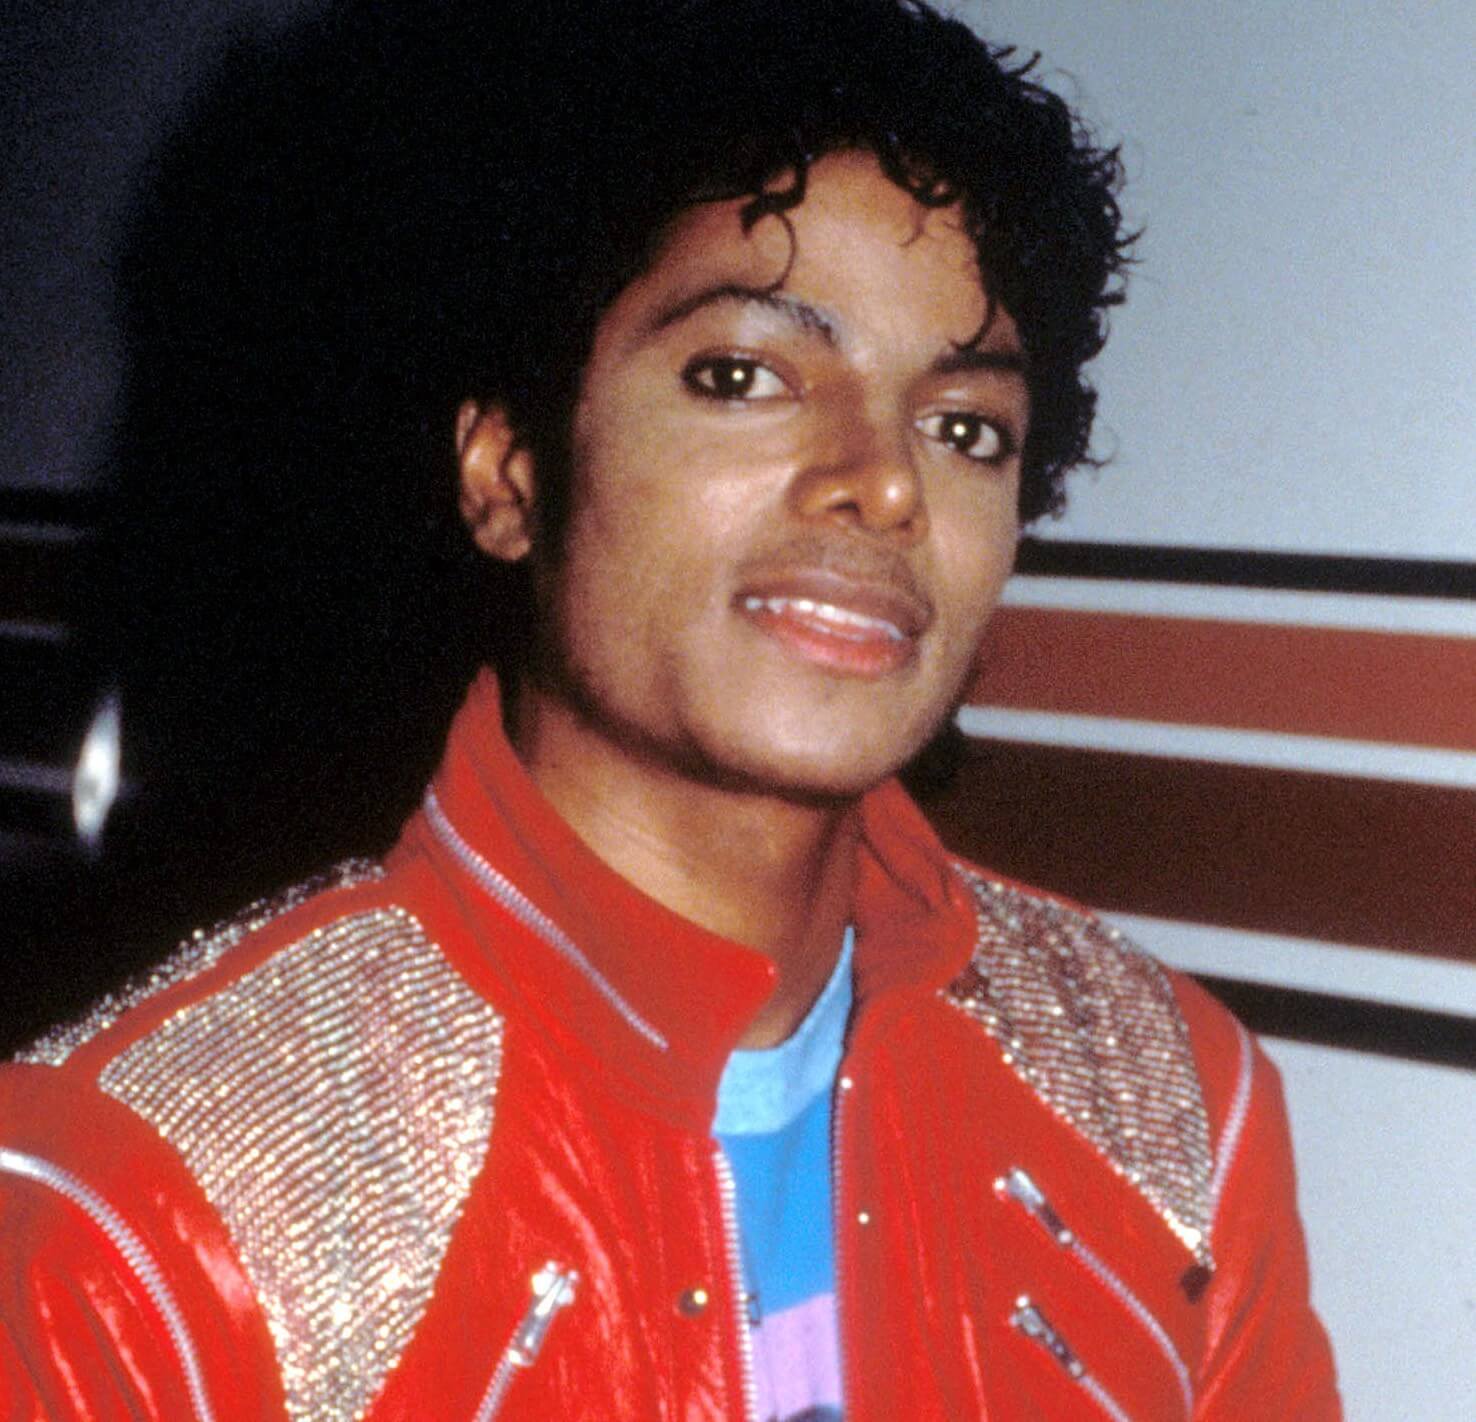 Michael Jackson wearing a jacket